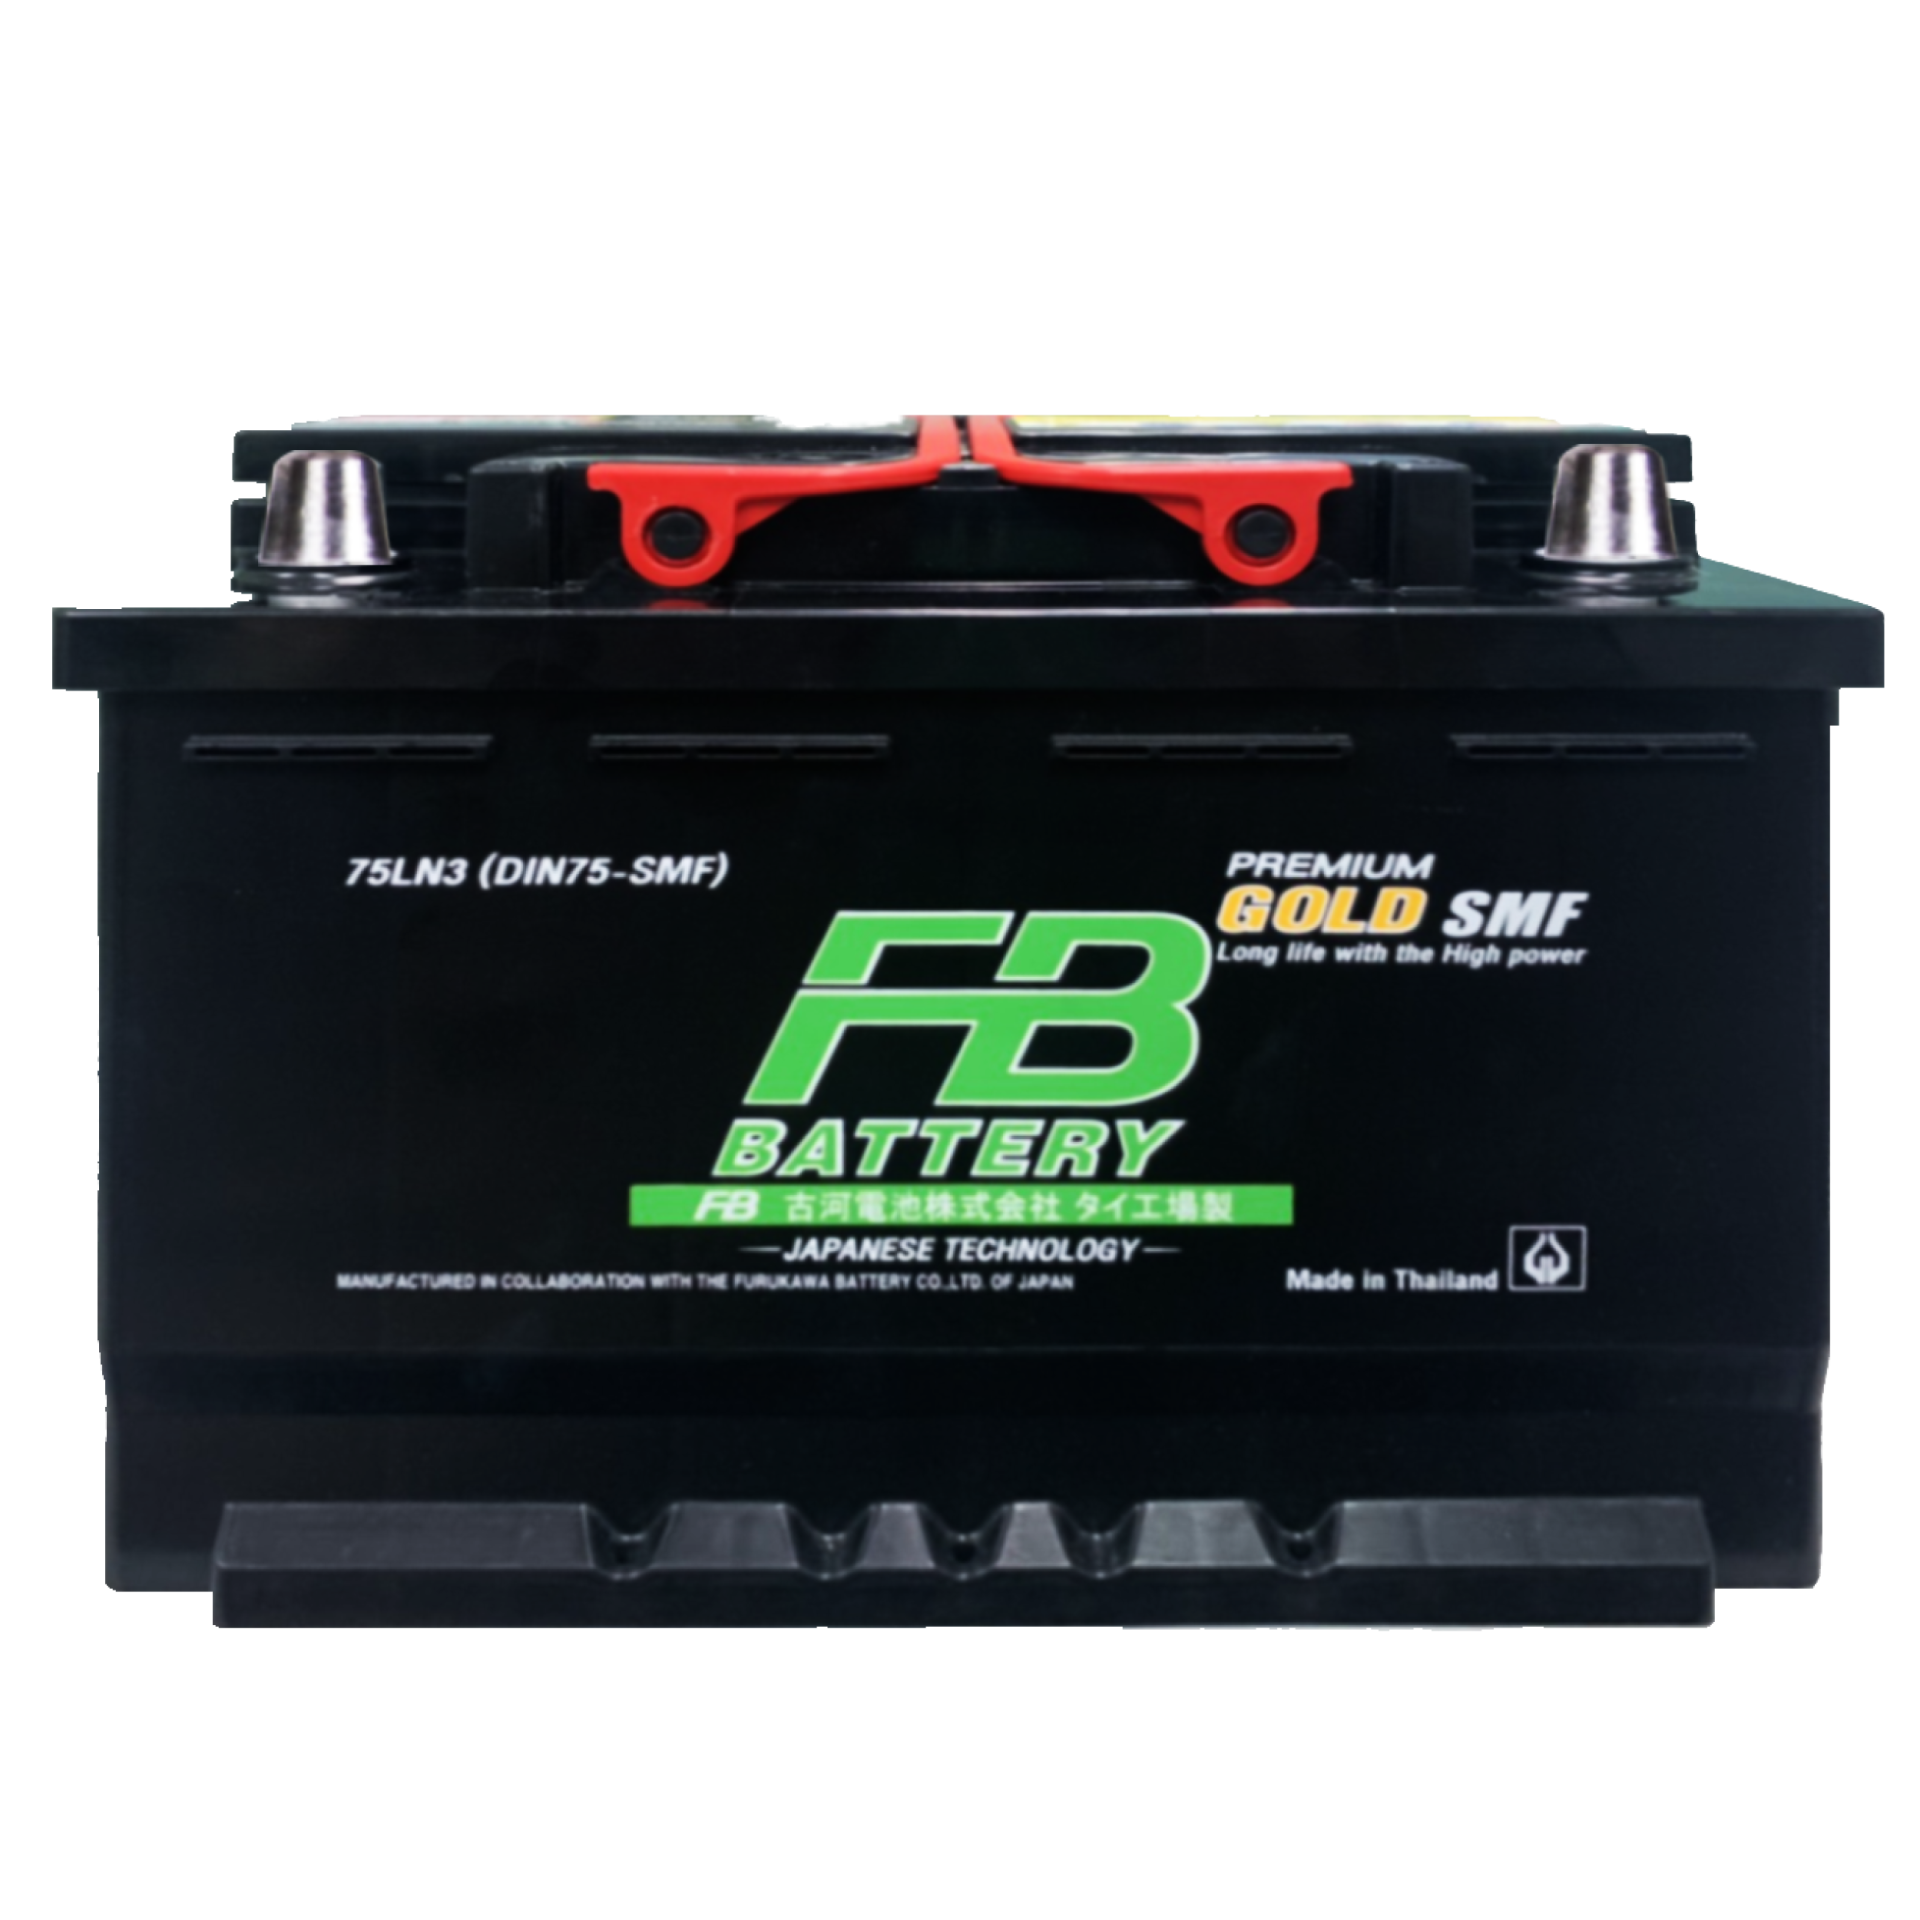 Battery FB Premium Gold 72LBN3L SMF (Sealed Maintenance Free Type